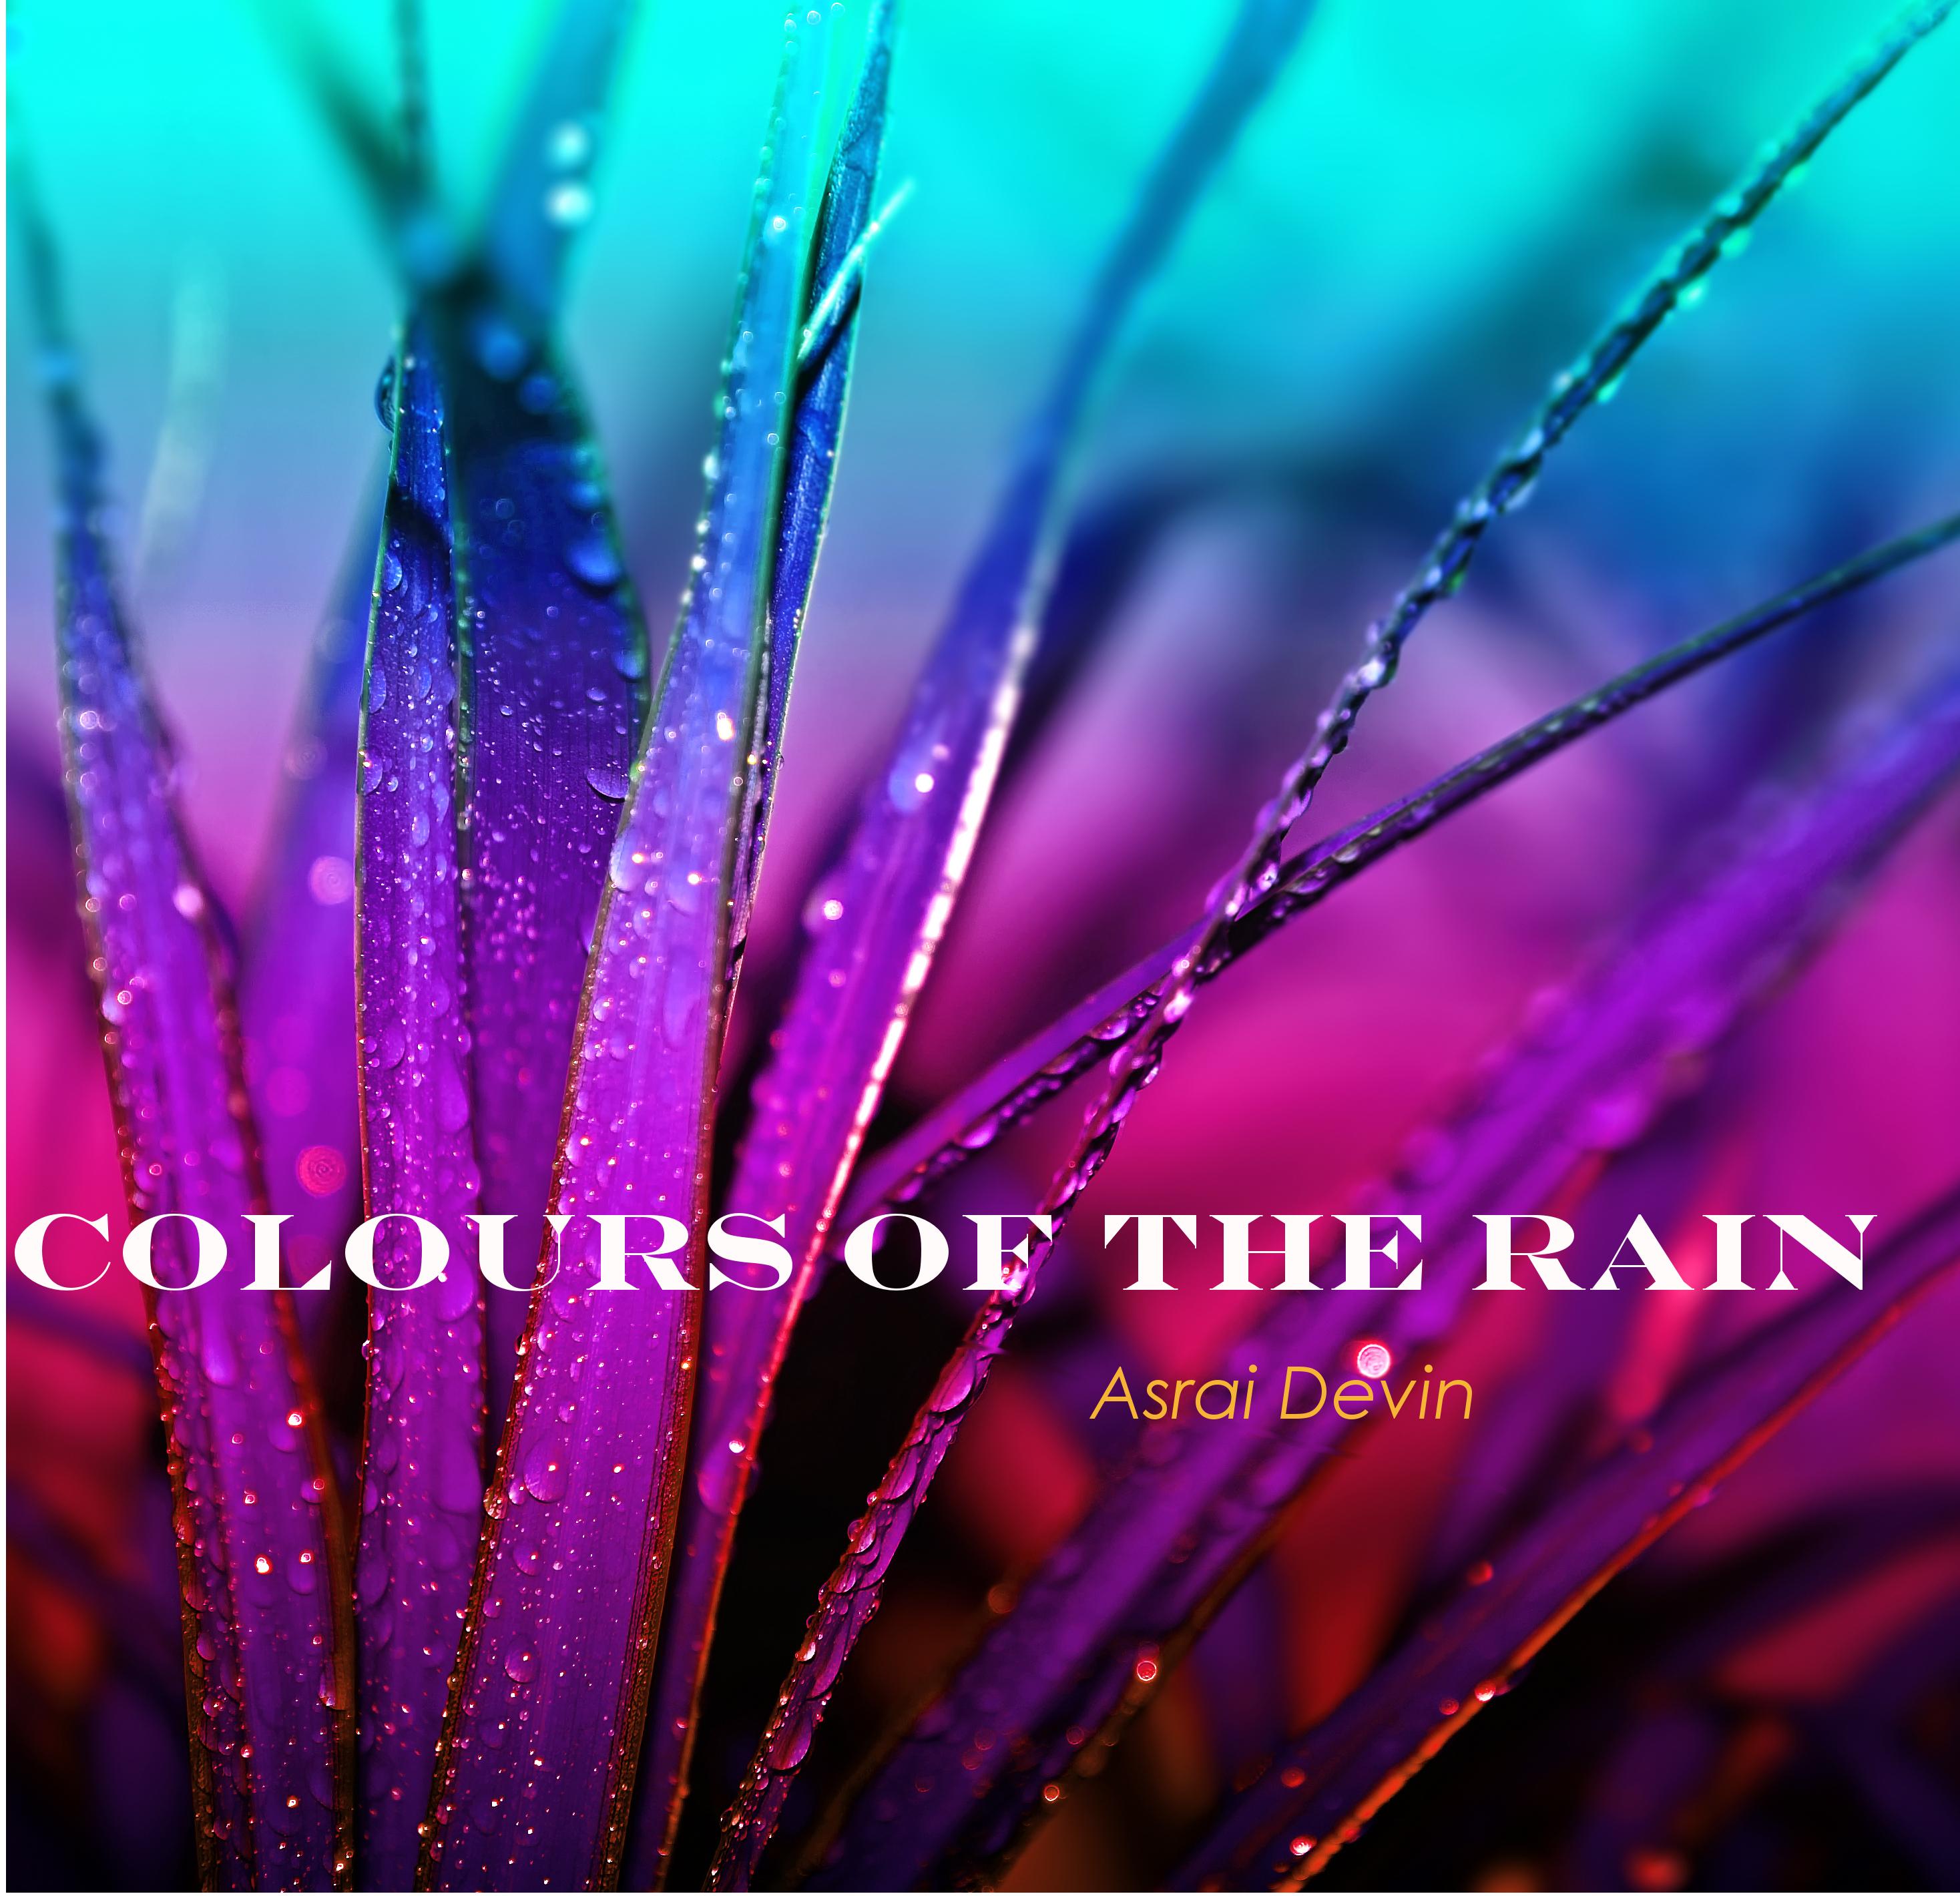 Colours of the rain